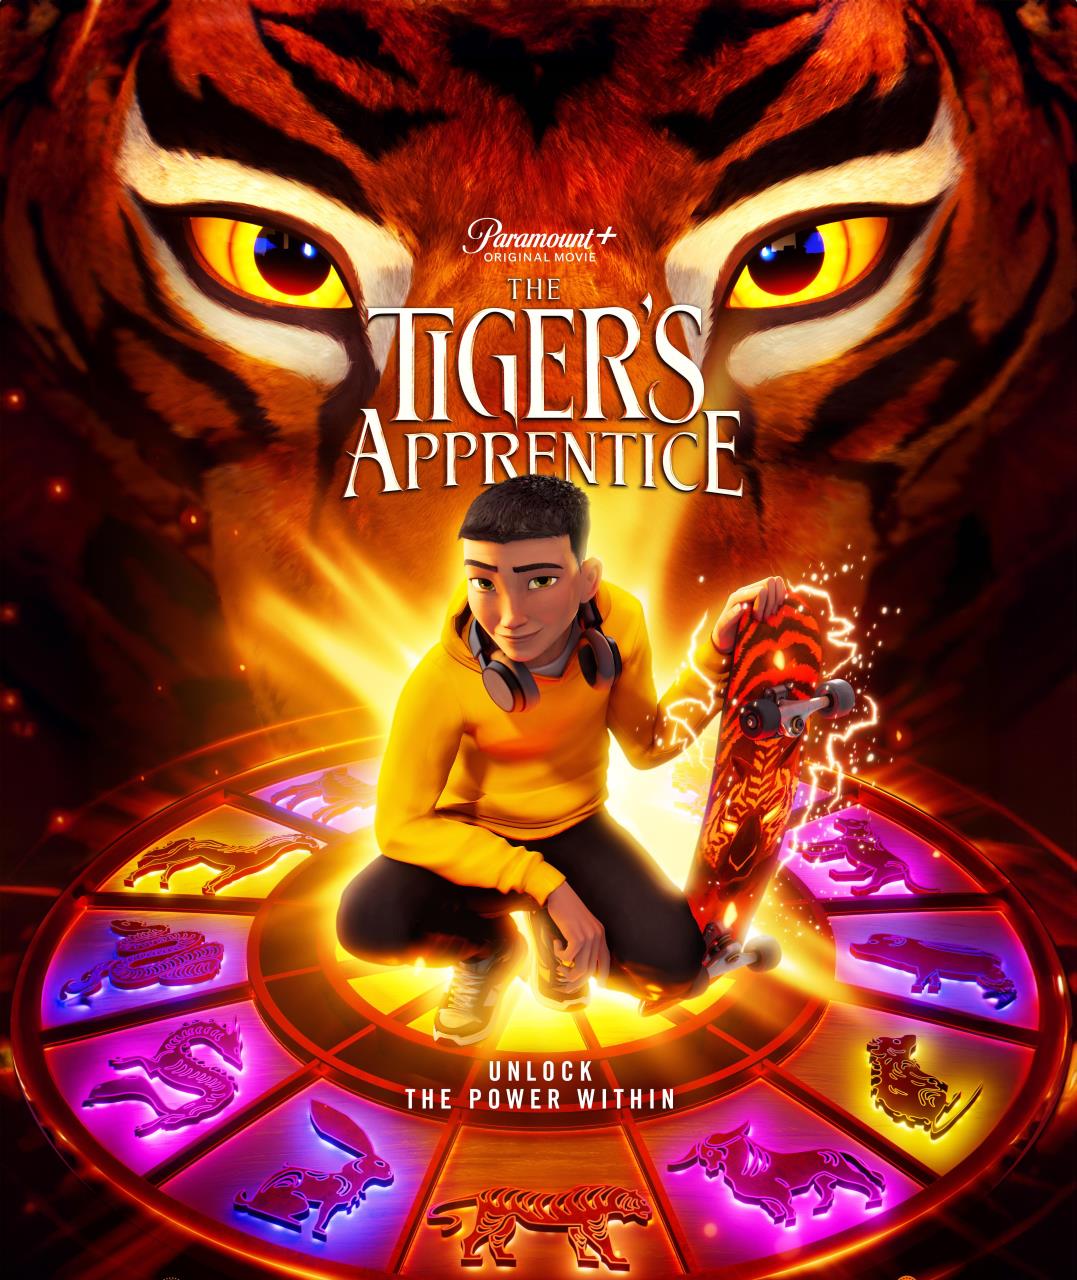 Movie- The Tiger's Apprentice